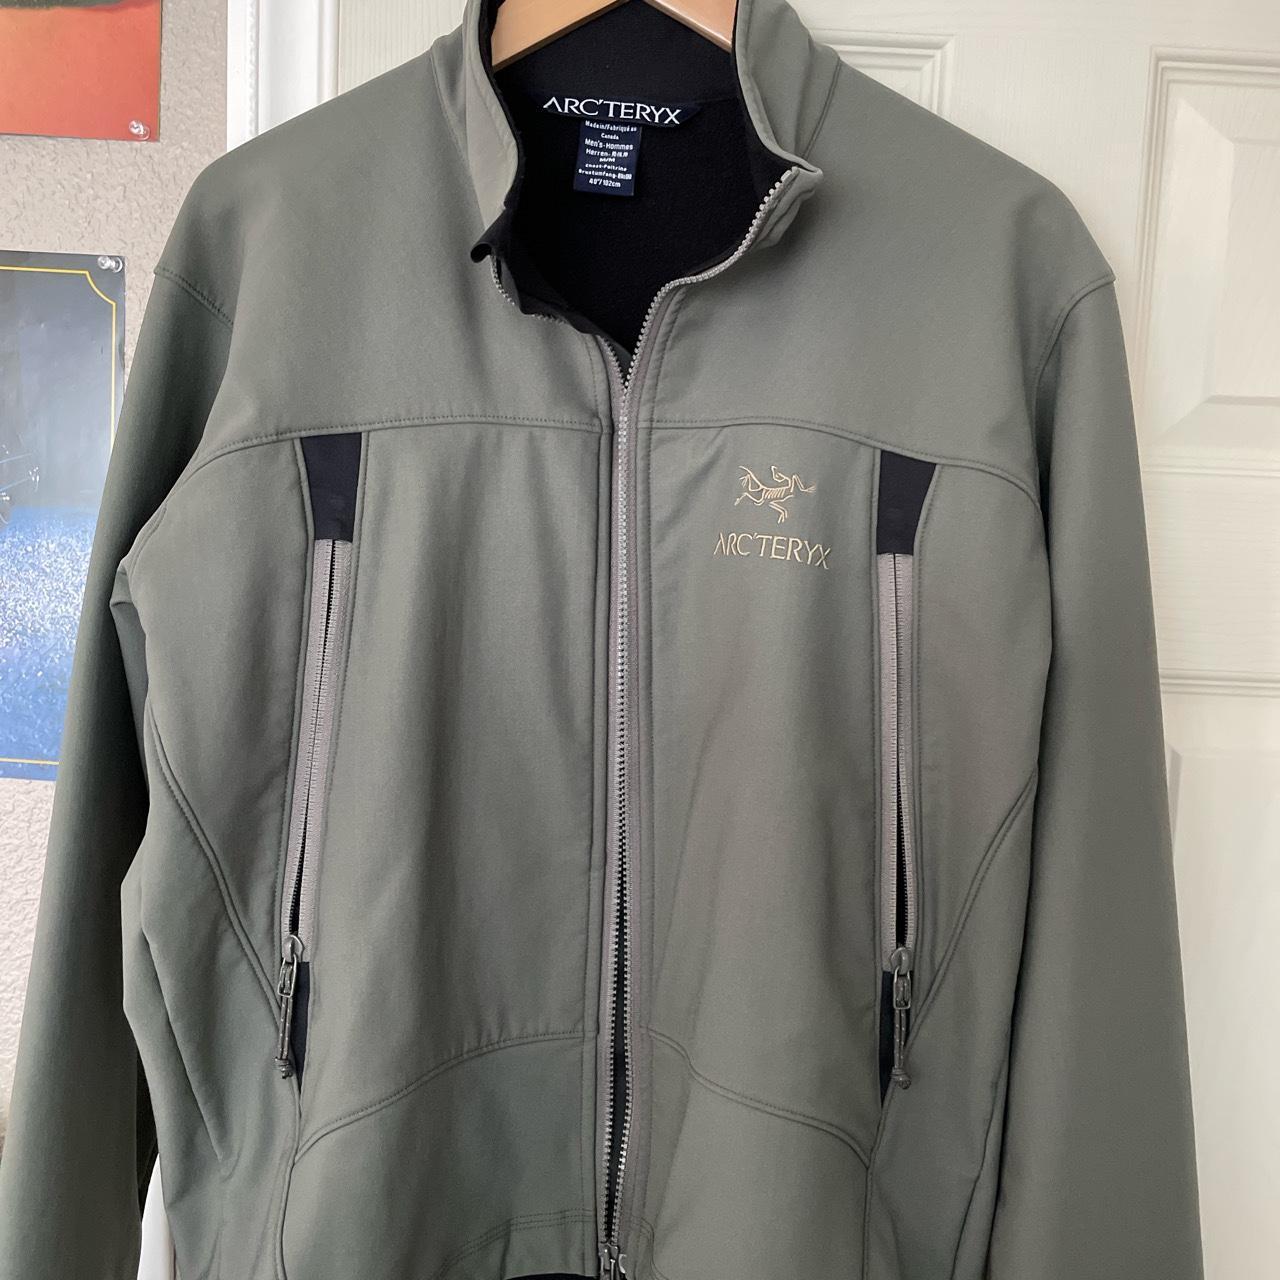 Arc’teryx Gamma SV polartec jacket, Great condition...